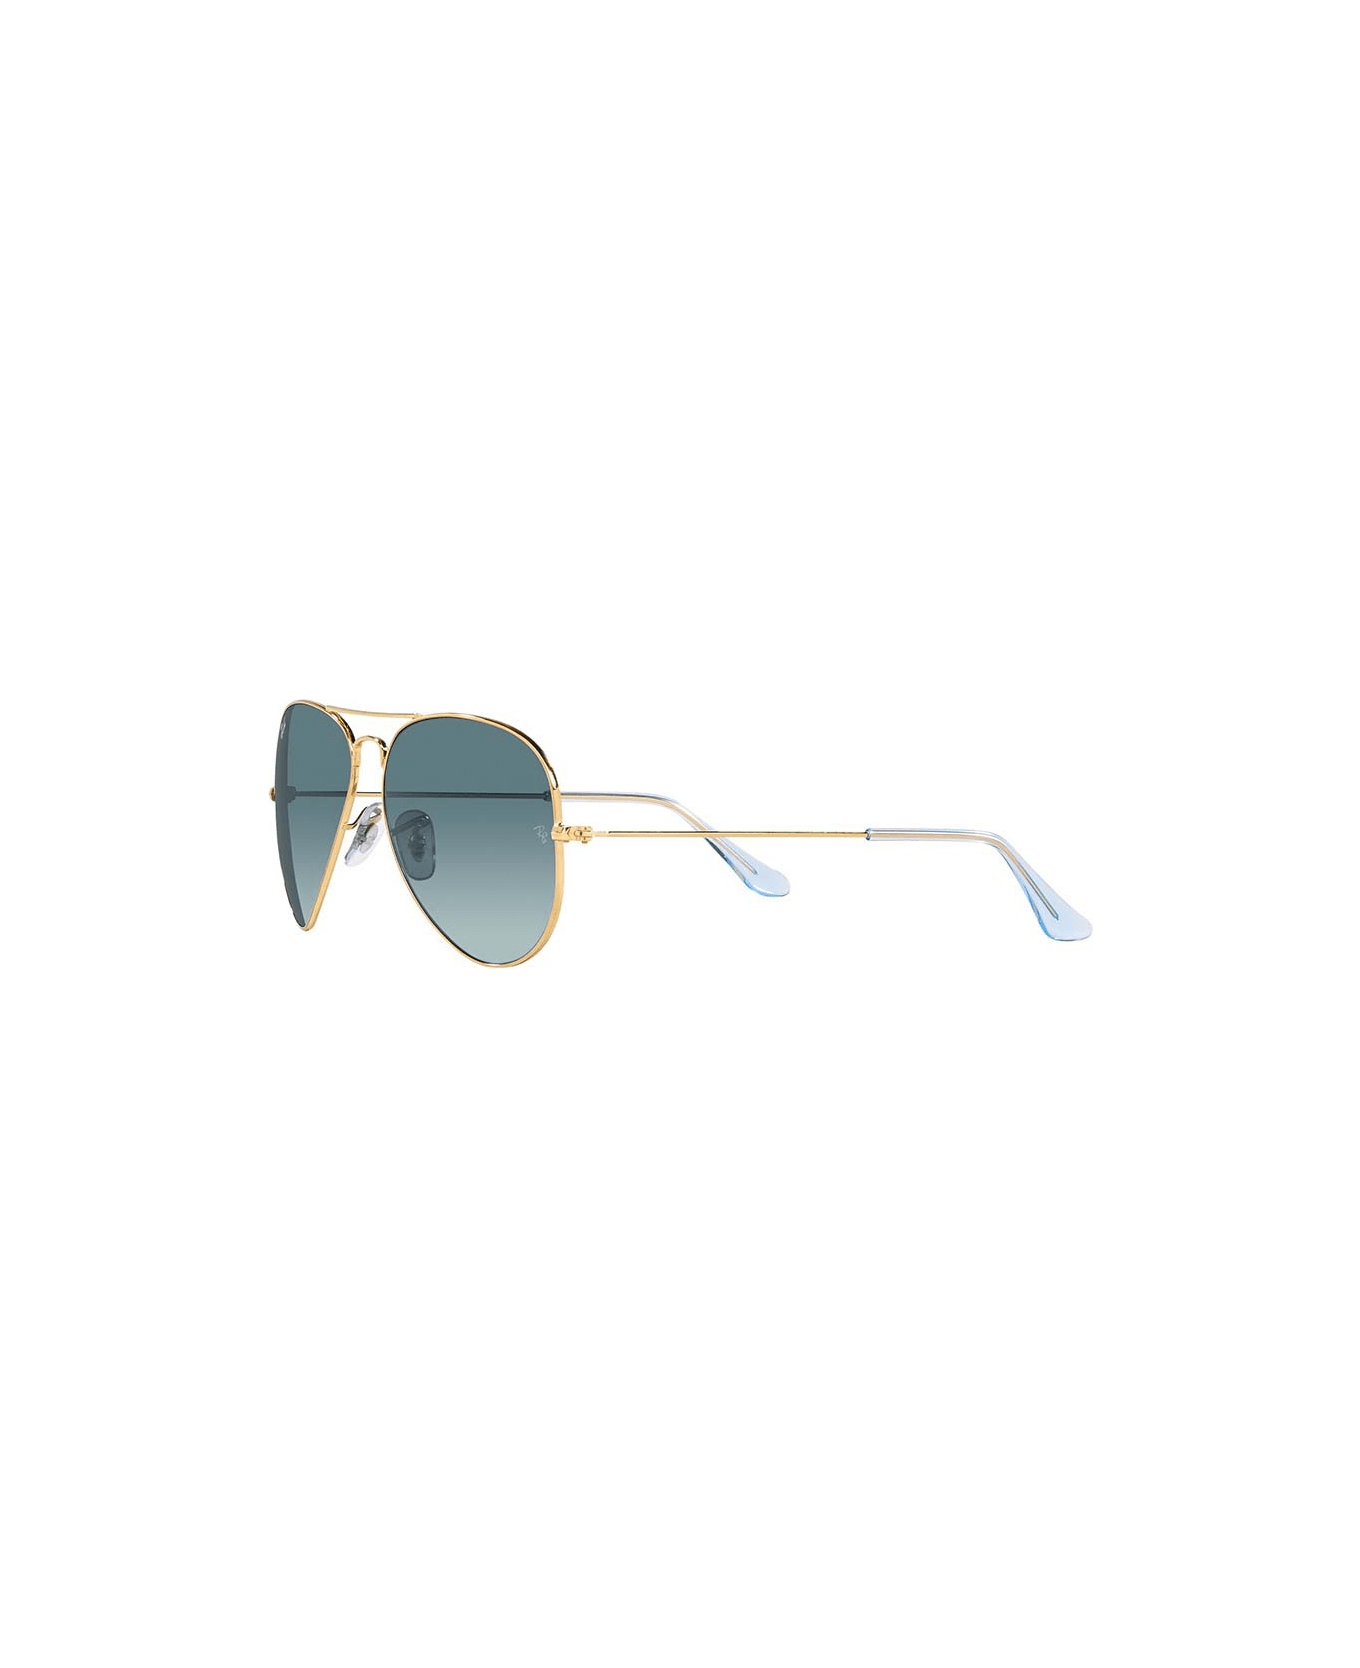 Ray-Ban Sunglasses choo - Oro/Blu sfumato